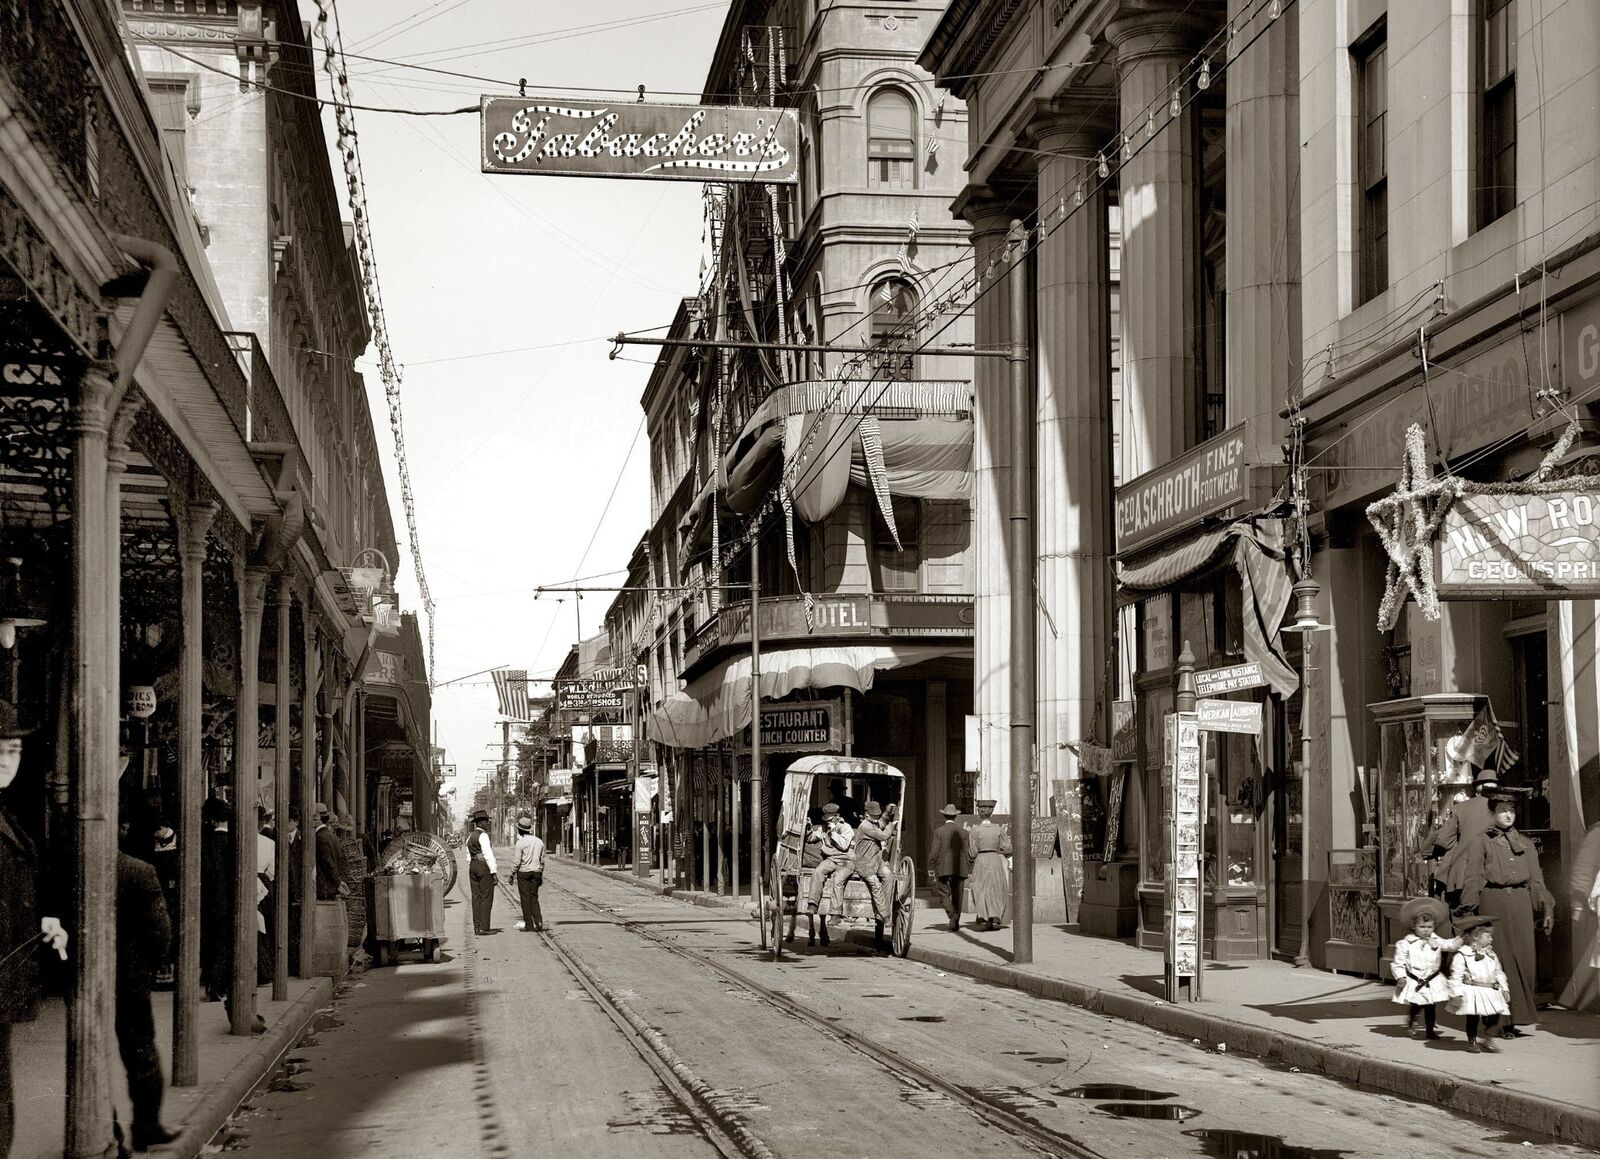 1906 NEW ORLEANS Royal St STREET SCENE PHOTO  (197-B)